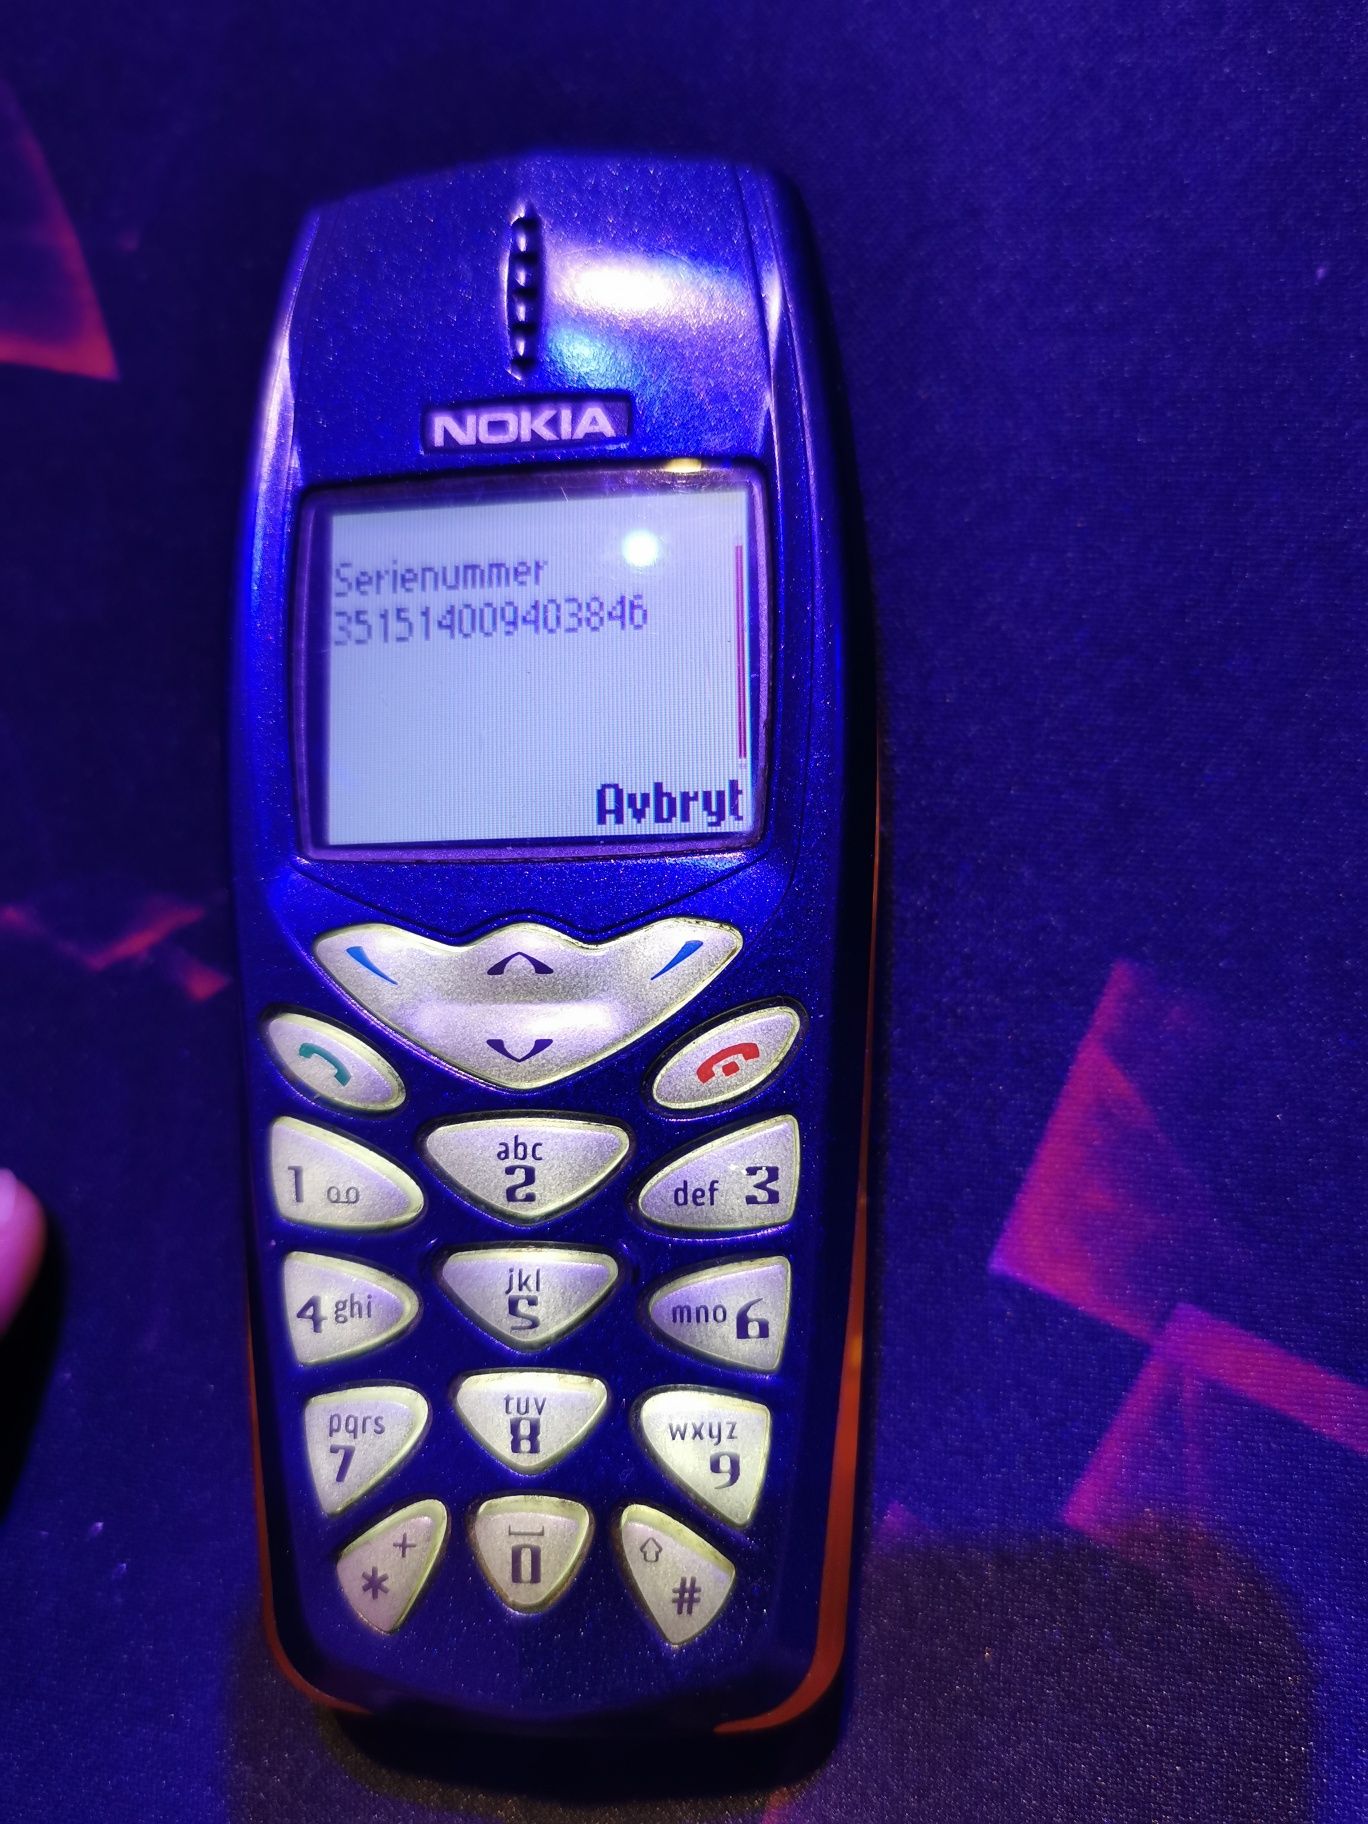 Nokia 3510i made in Hungary